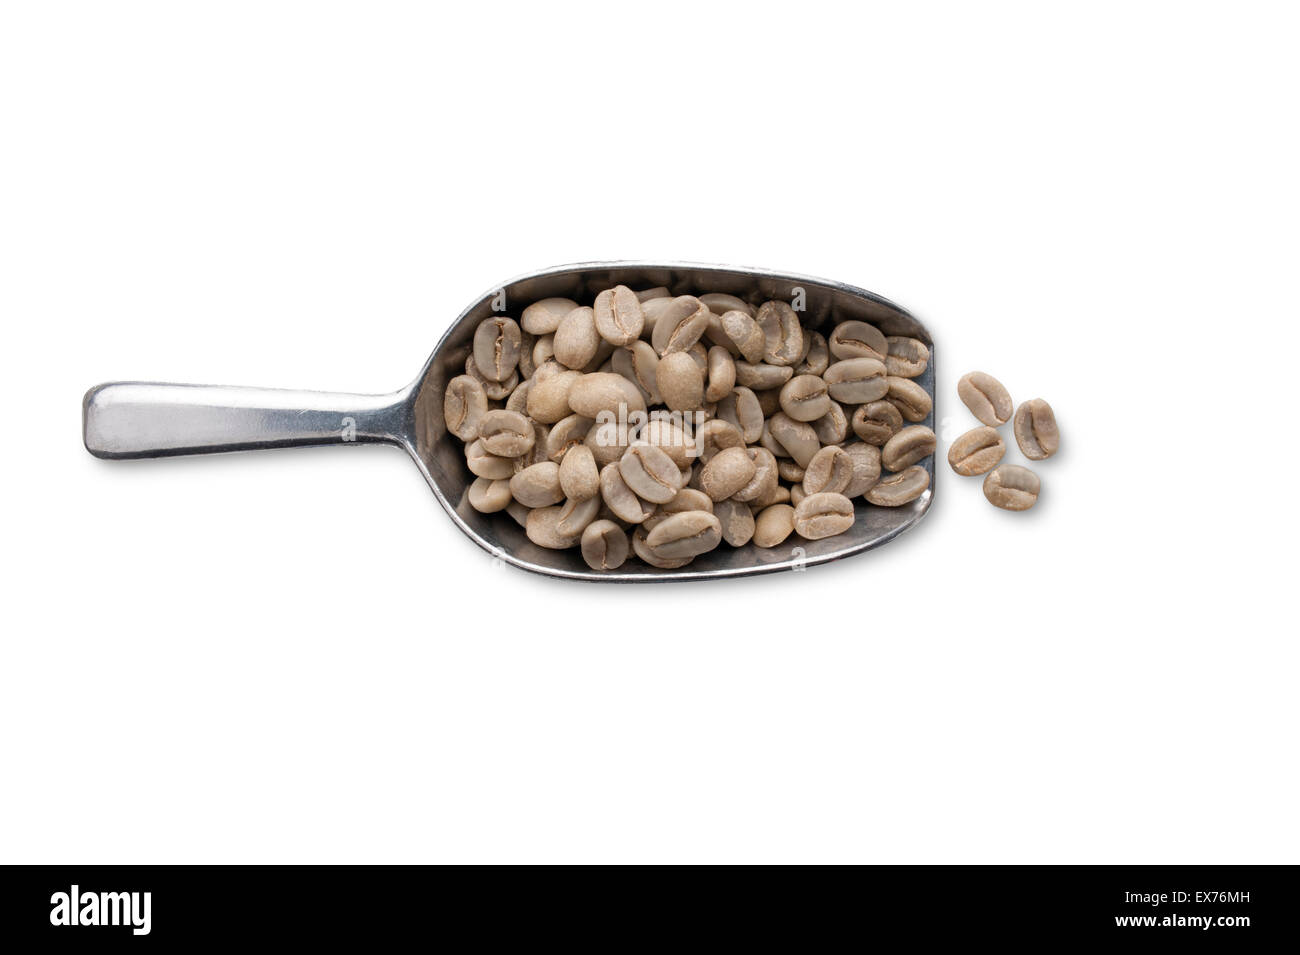 Kenya, washed AA coffee beans Stock Photo